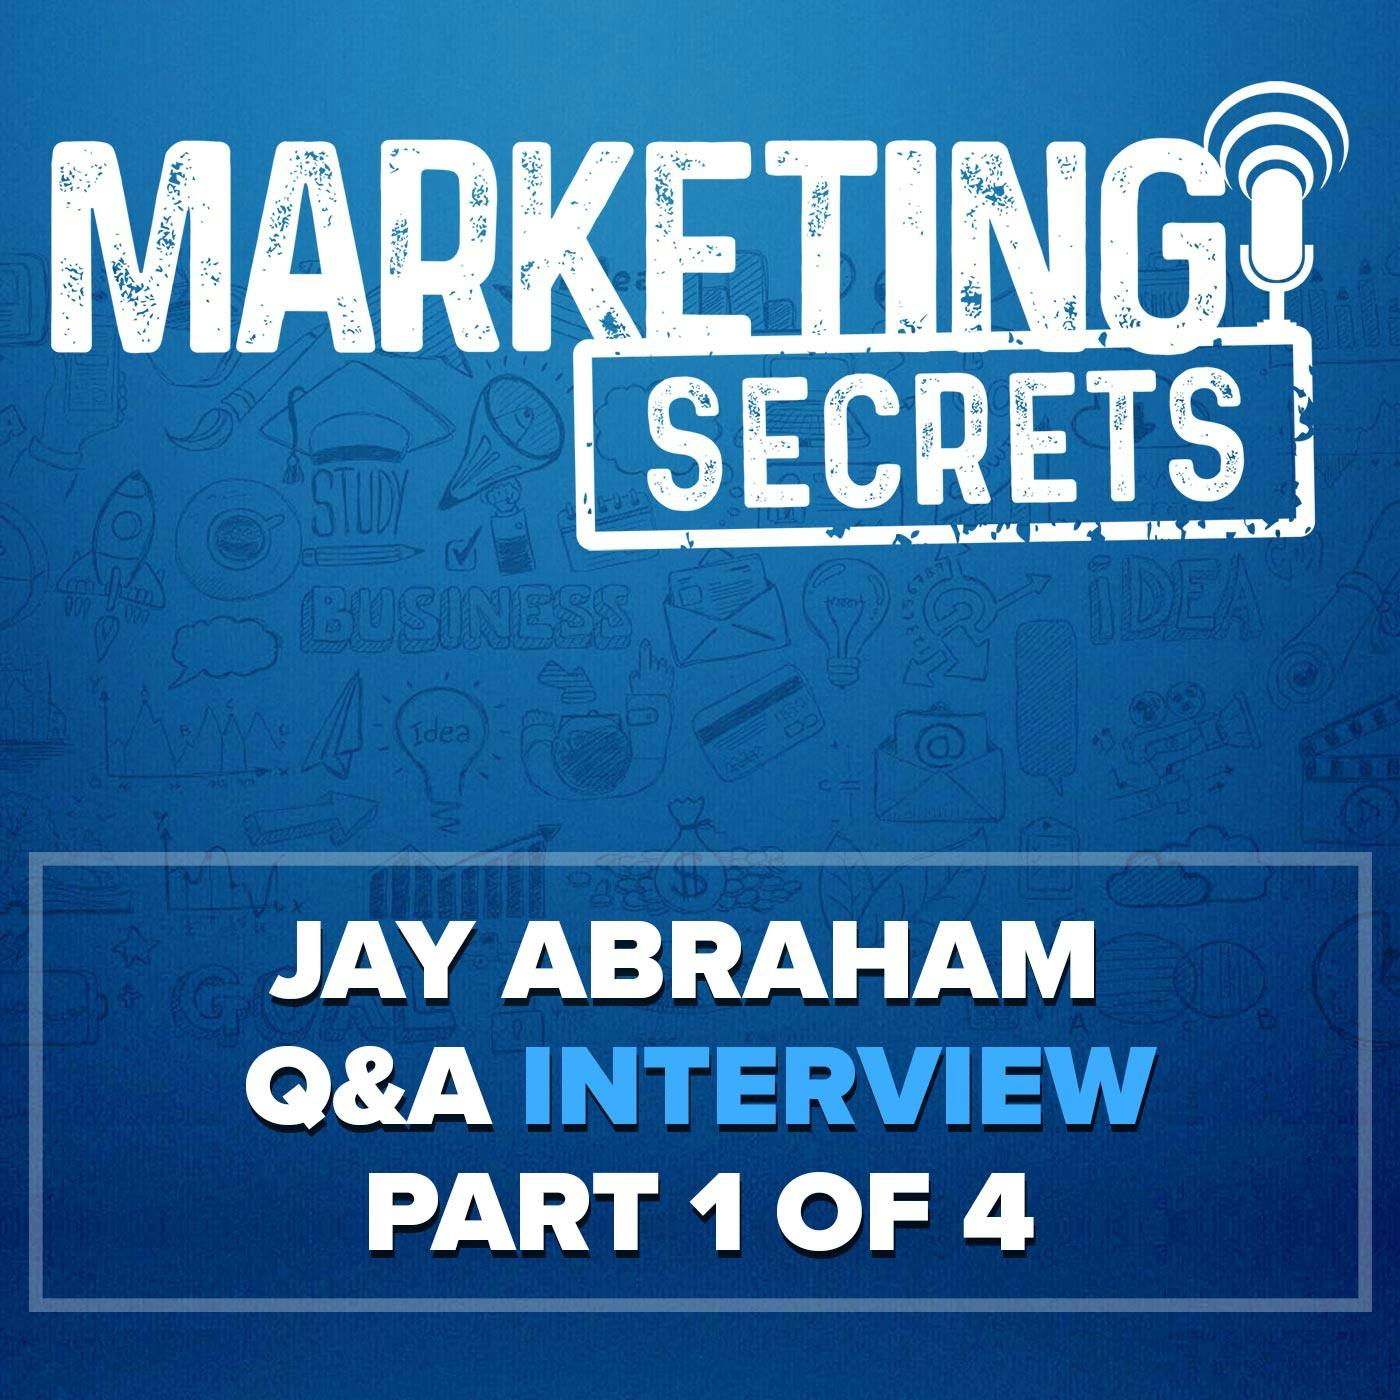 Jay Abraham Q&A Interview - Part 1 of 4